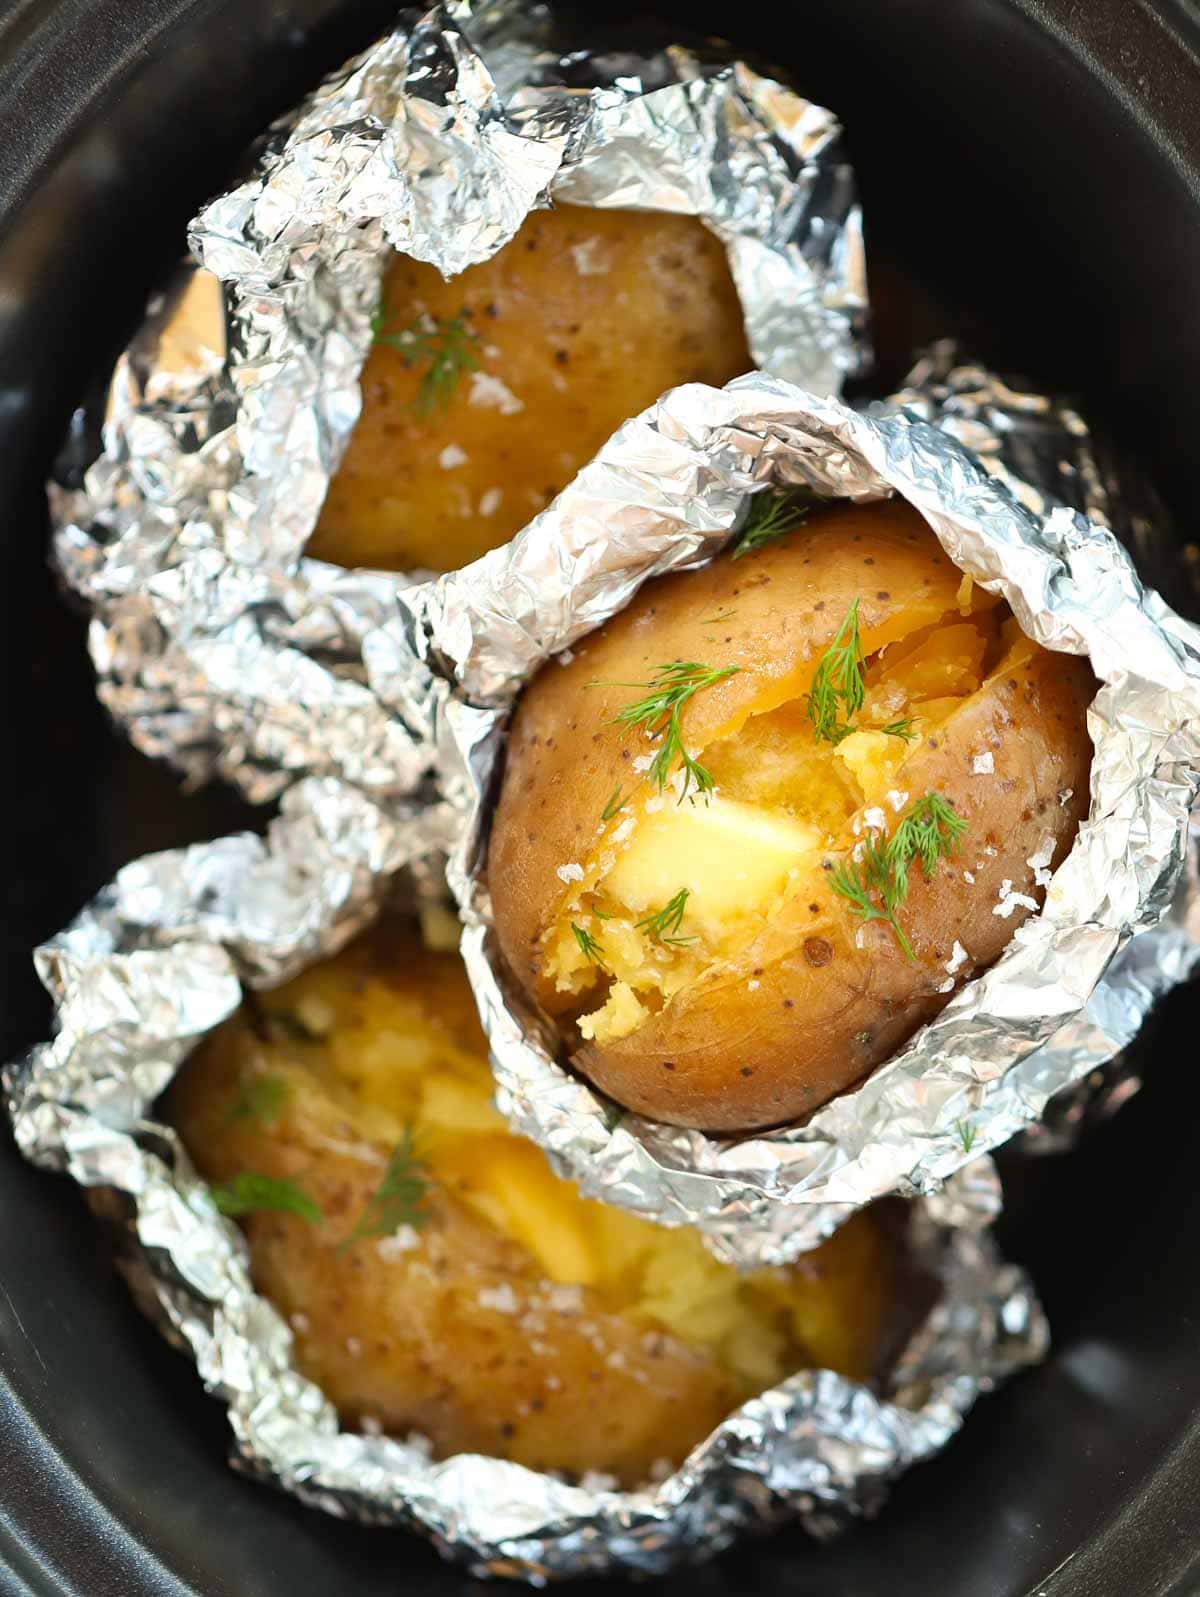 Slow Cooker Jacket Potatoes {Easiest Ever Recipe!}